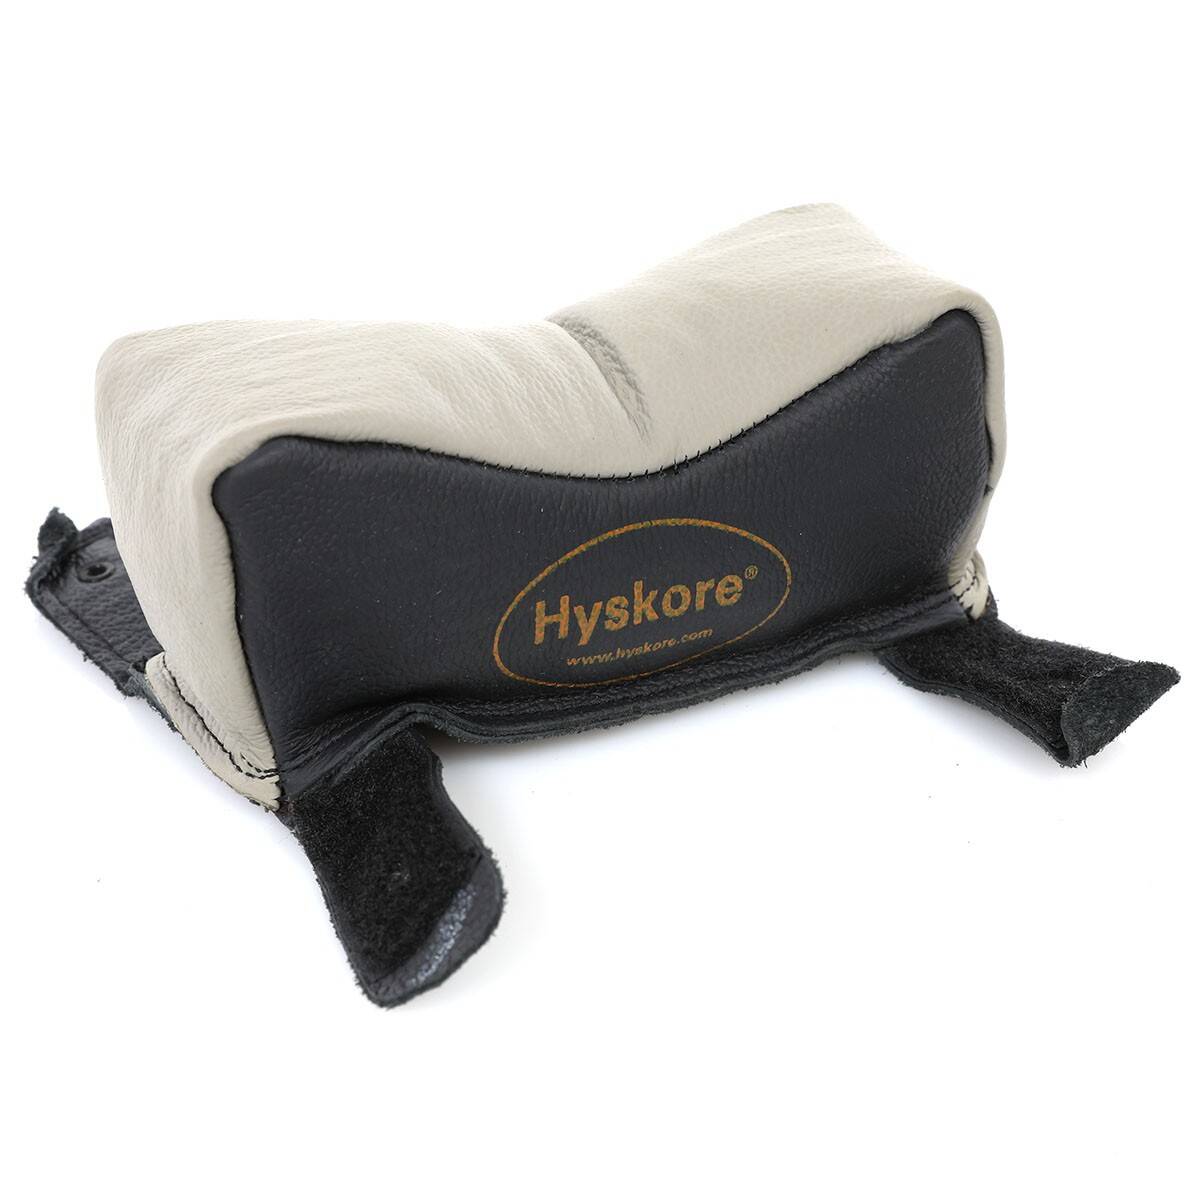 Hyskore Rest Bag Standard